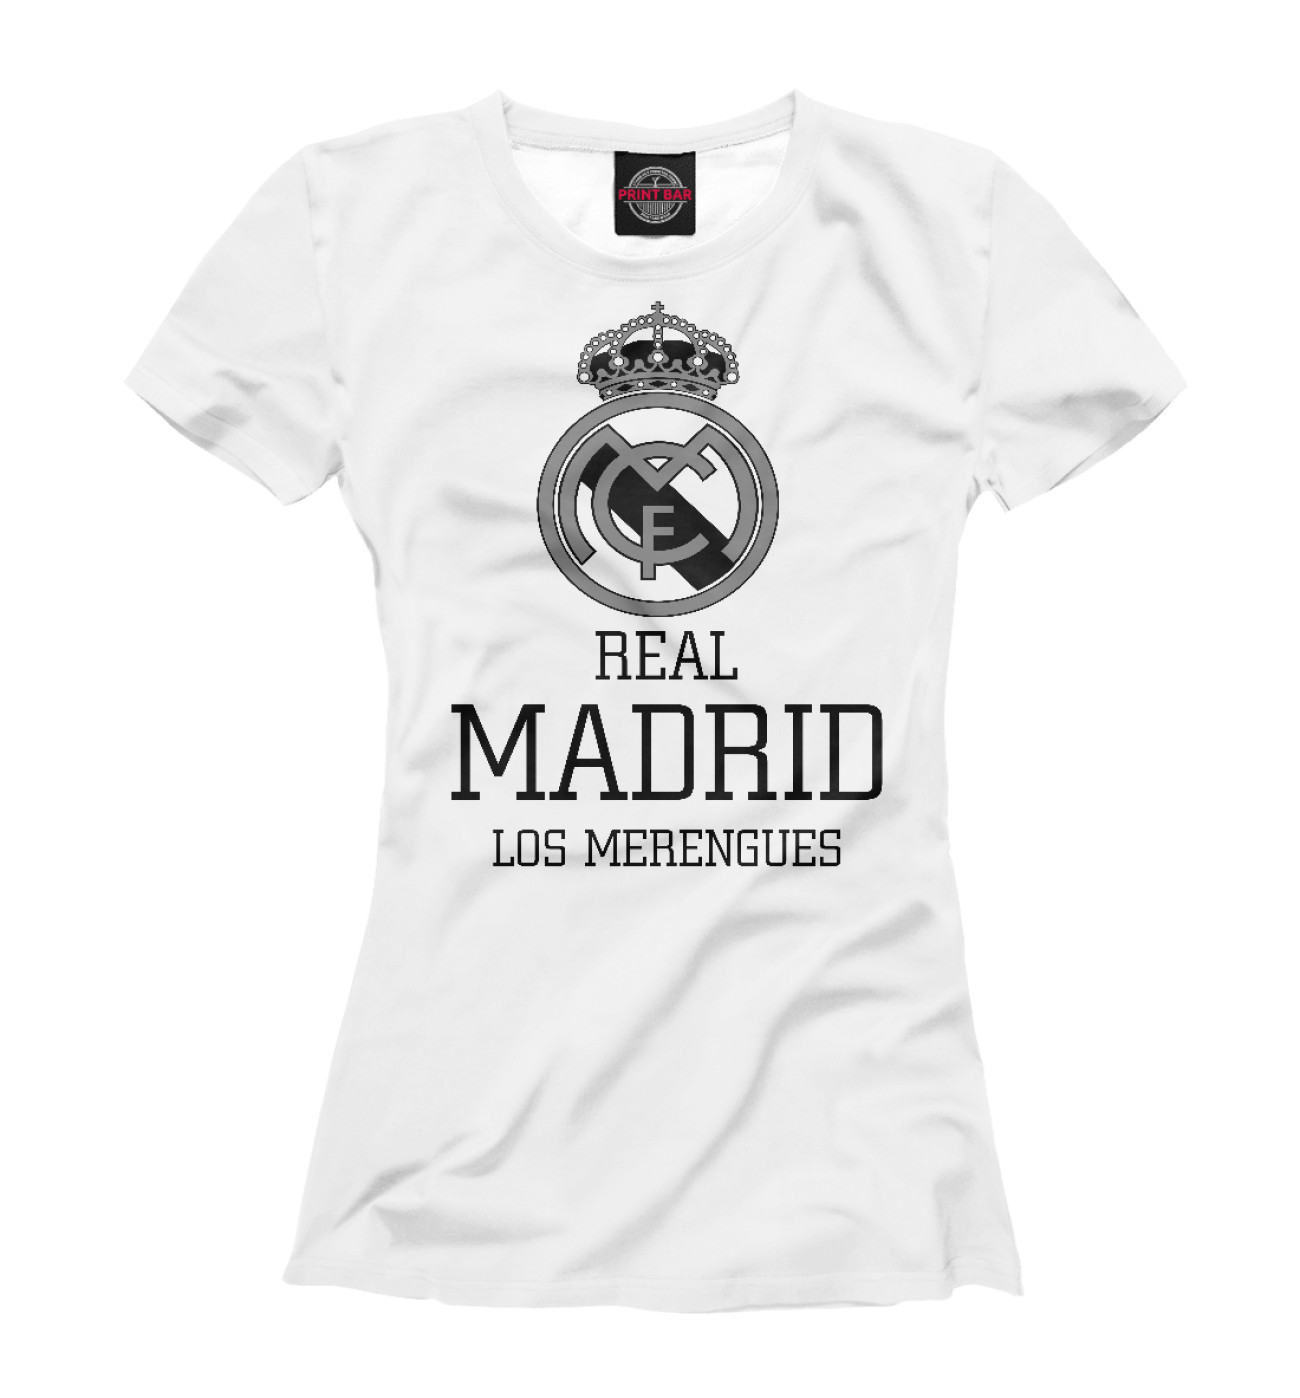 Real madrid купить футболку. Футболки футболка Реал Мадрид. Футболка снейжер Реал Мадрид. Майка Реал Мадрид. Женские футболки Реал Мадрид.